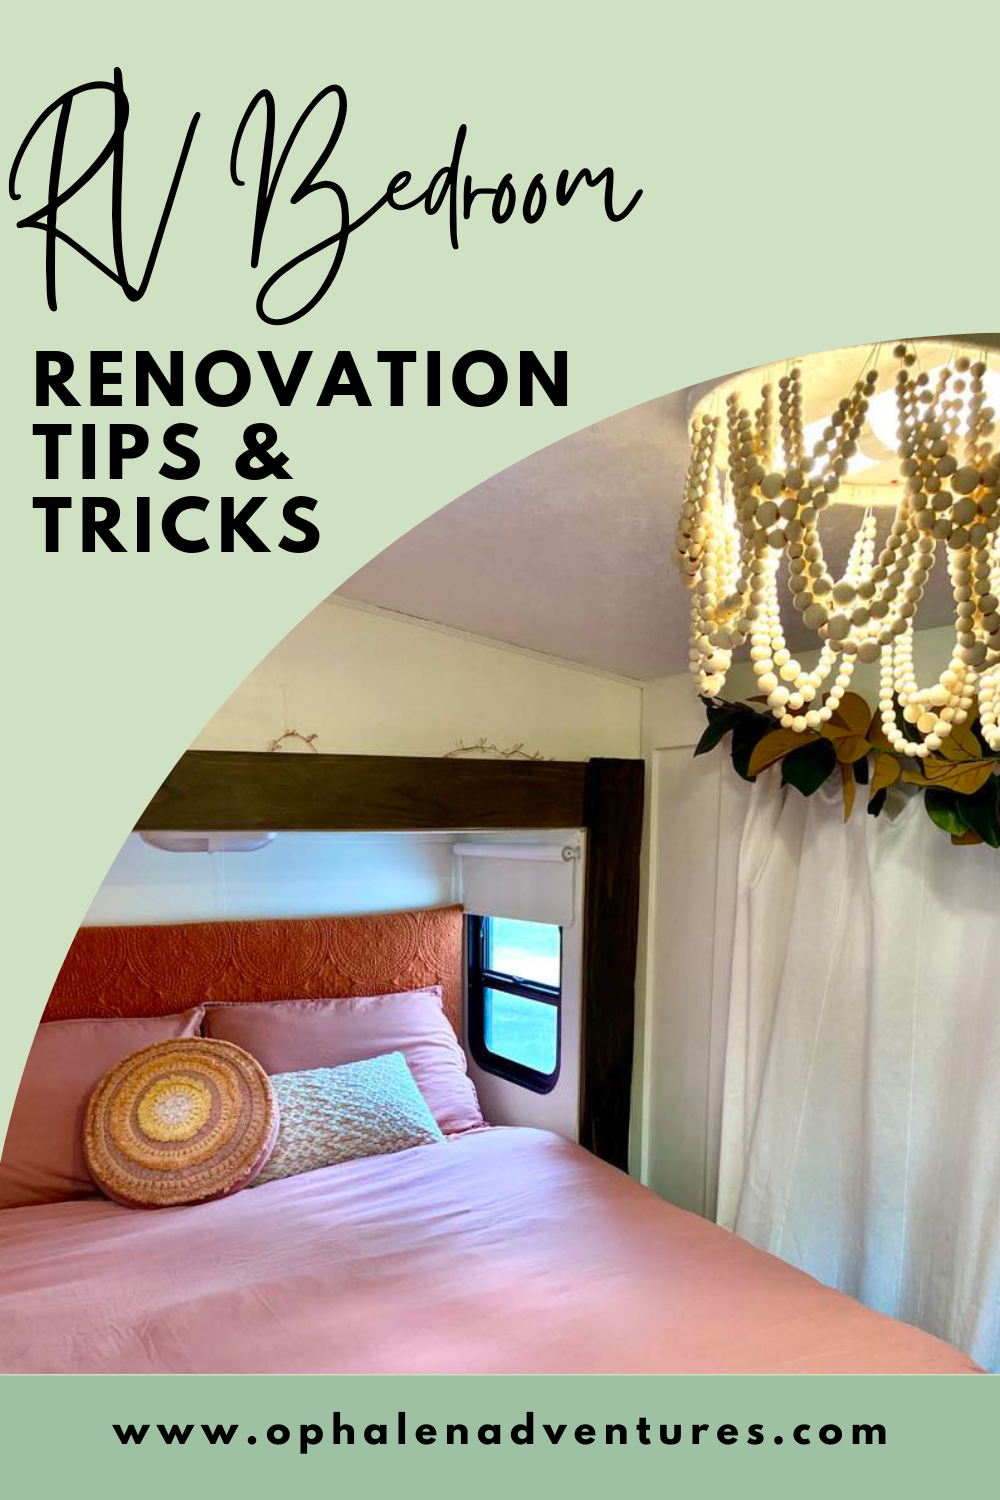 RV bedroom renovation | O'Phalen Adventures